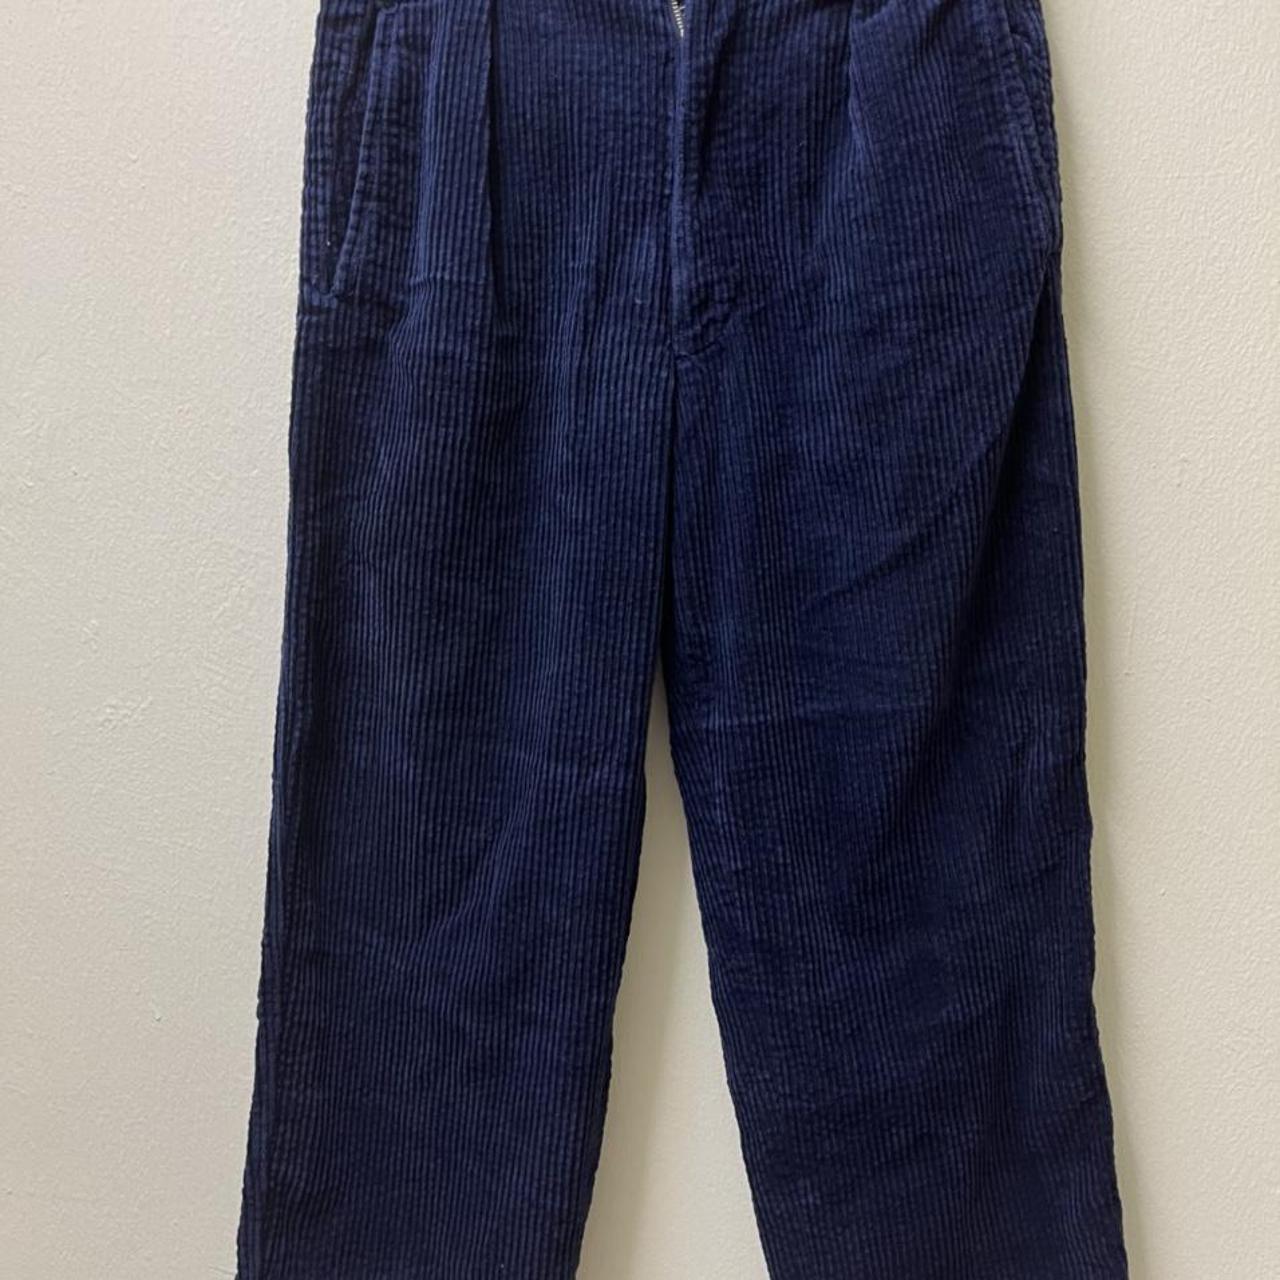 Product Image 1 - Nigel Cabourn Corduroy Pants
Size 29